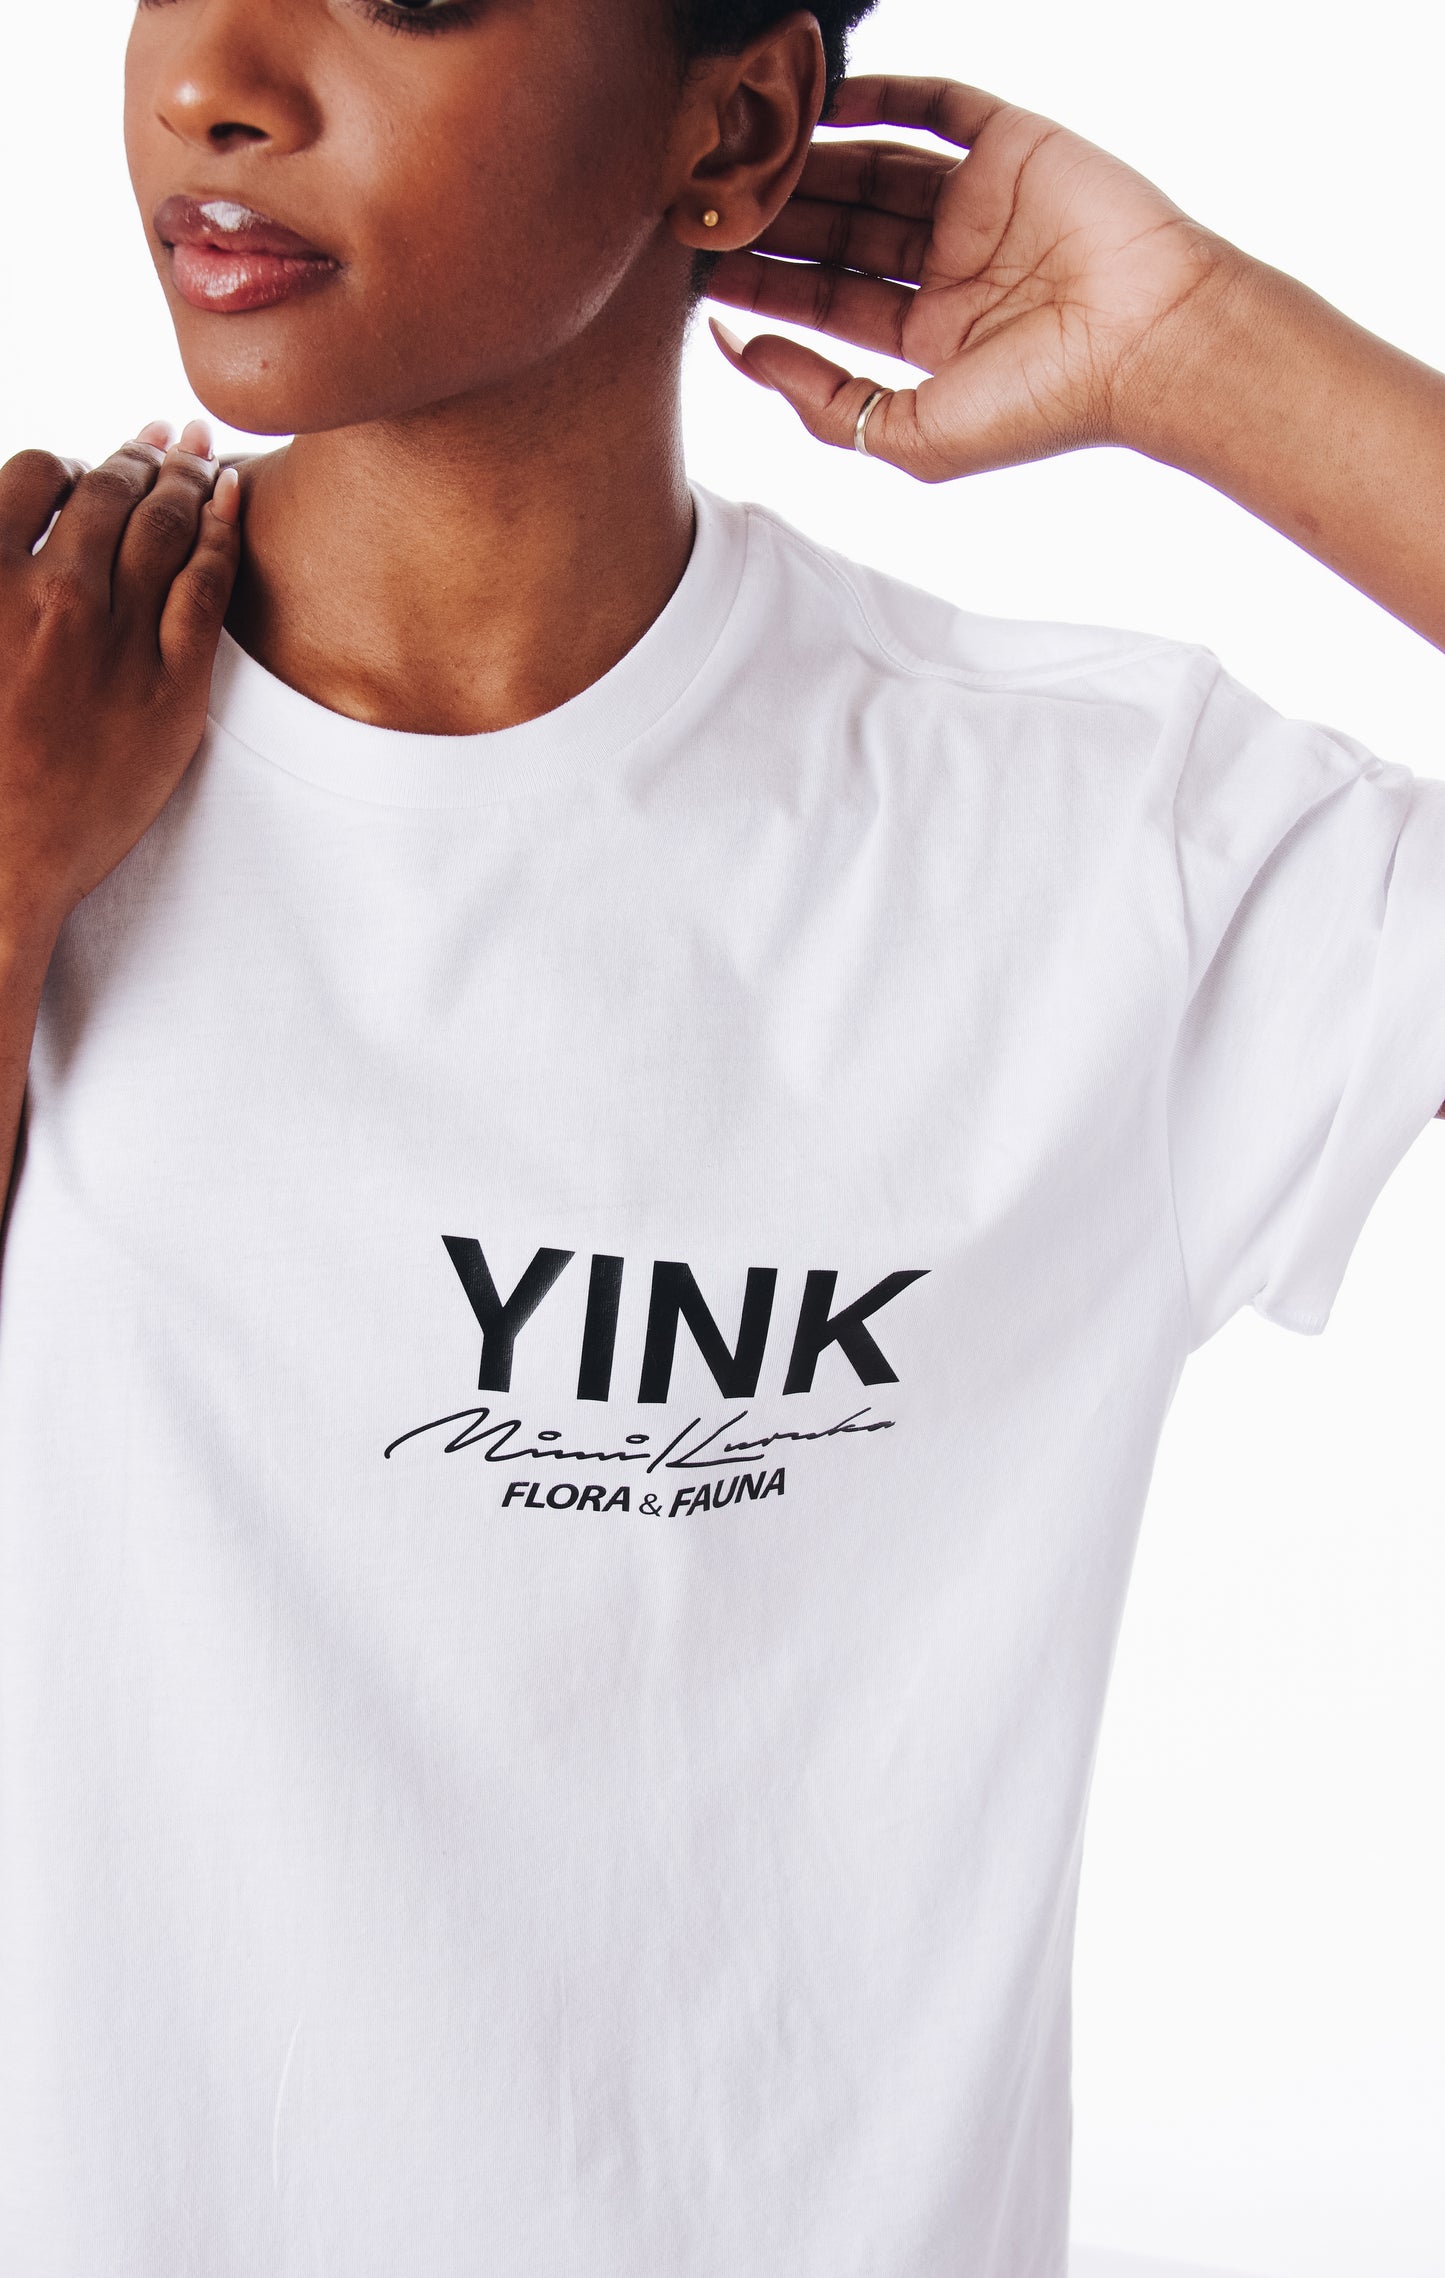 YINK™ c/o Mimi Kuruka: FLORA FAUNA MEN’s Black & White drop shoulder tee collection®.